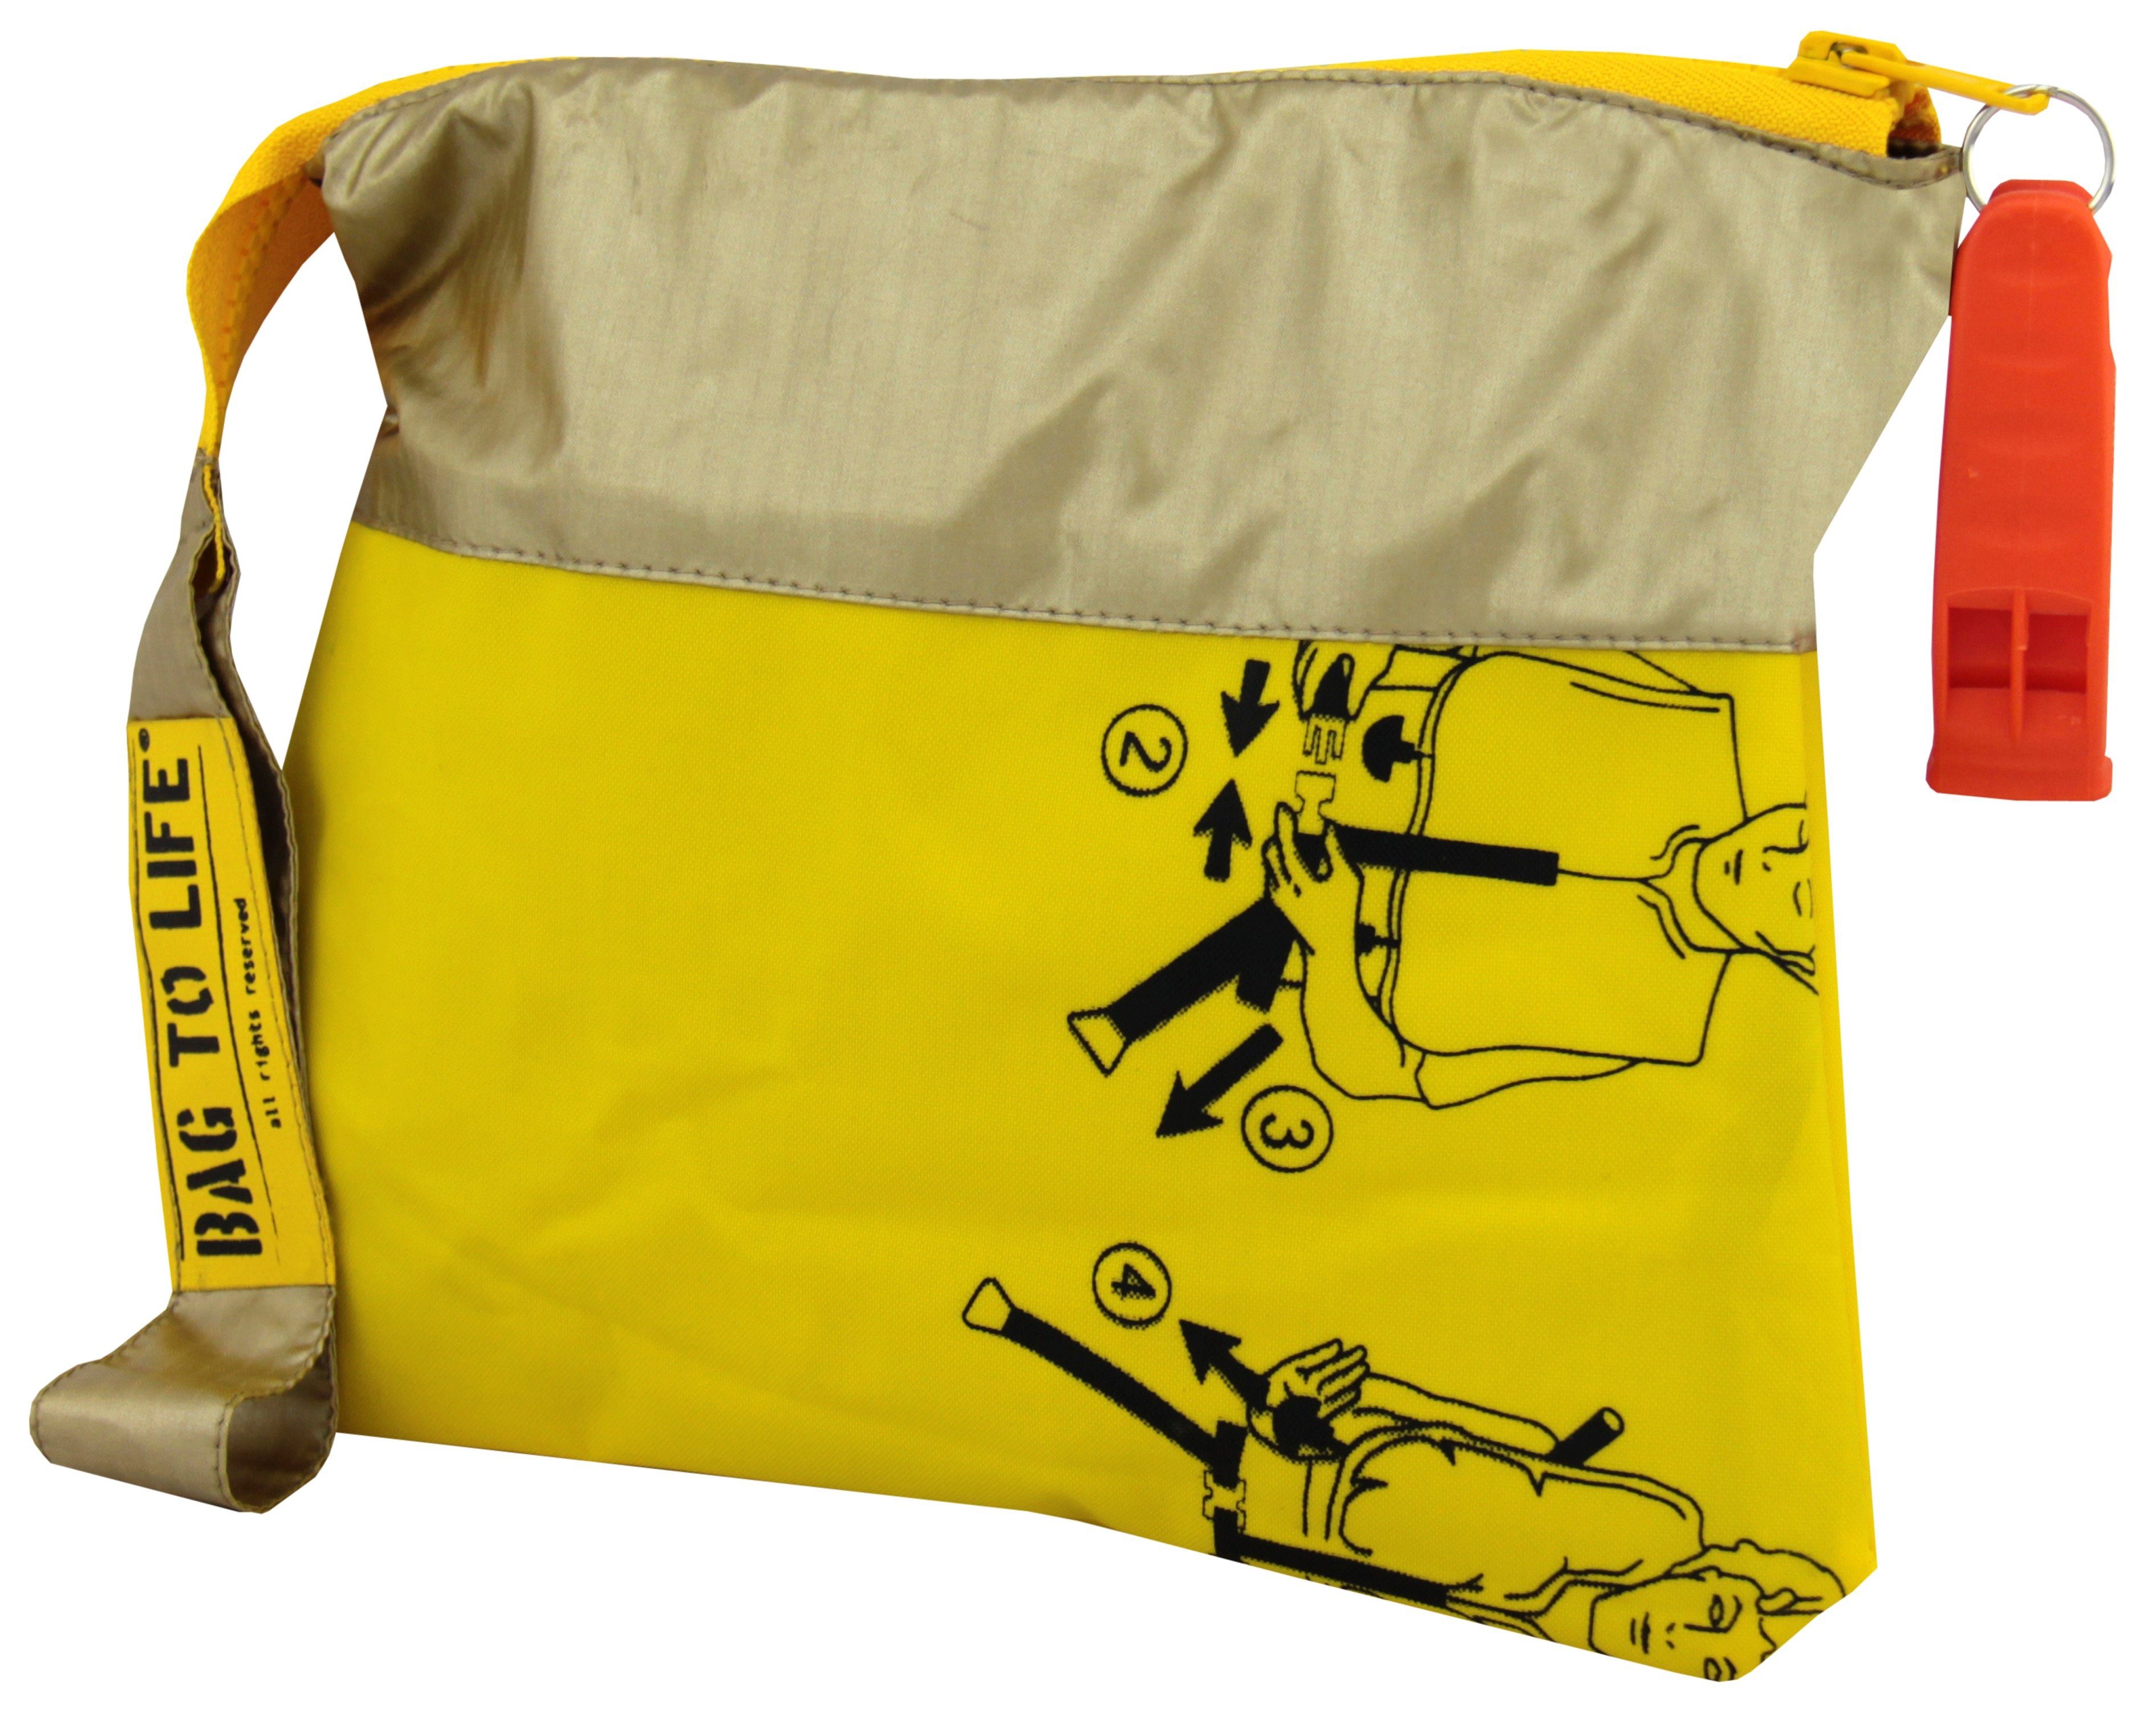 Amenity Kit, Rettungsweste aus Kosmetiktasche recycelter to Life Bag